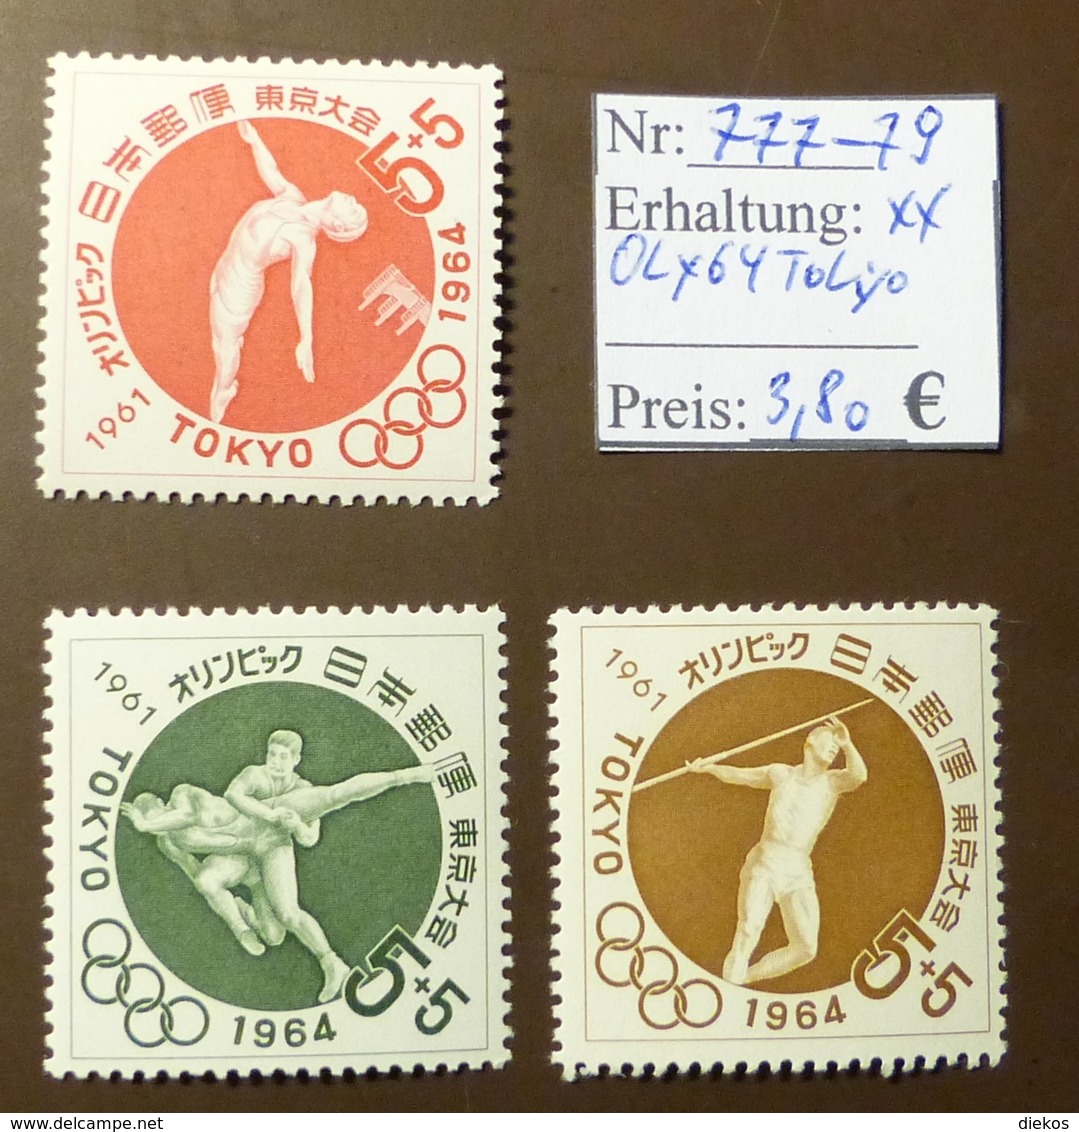 Japan Olympia 1964  MiNr: 777-79  Postfrisch ** MNH     #4910 - Zomer 1964: Tokyo